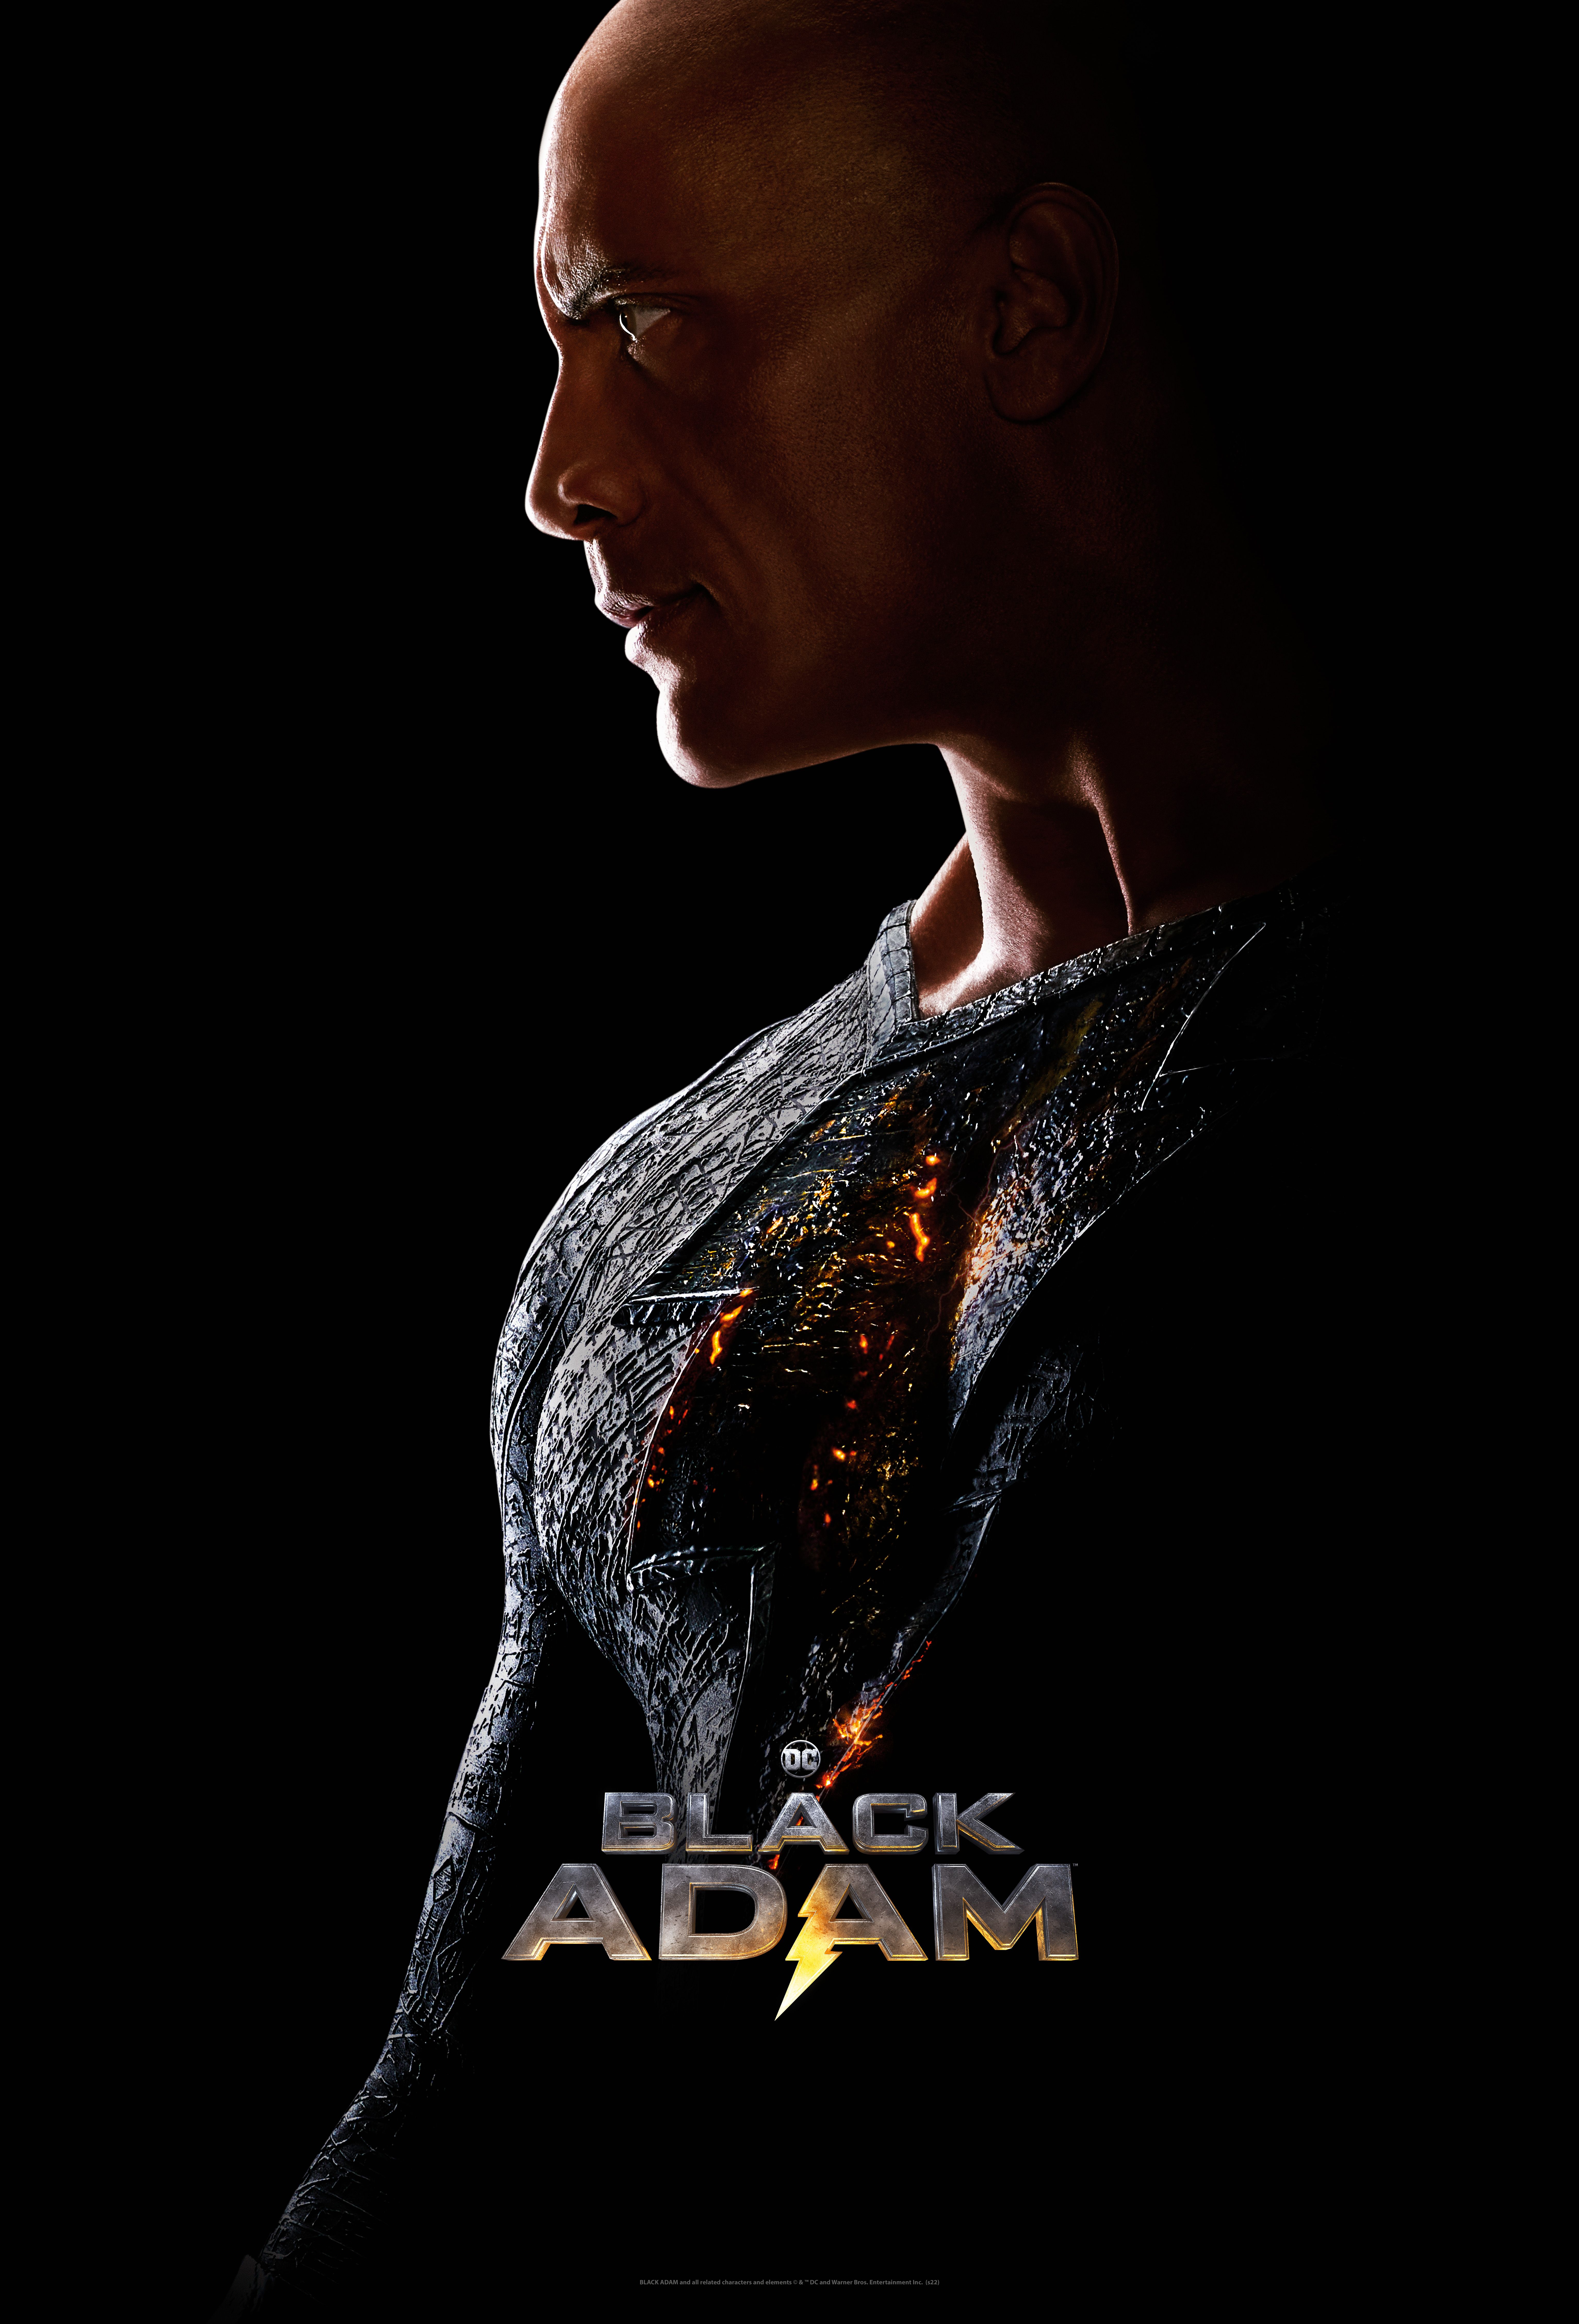 Black Adam Movie Poster sent by Spin Master